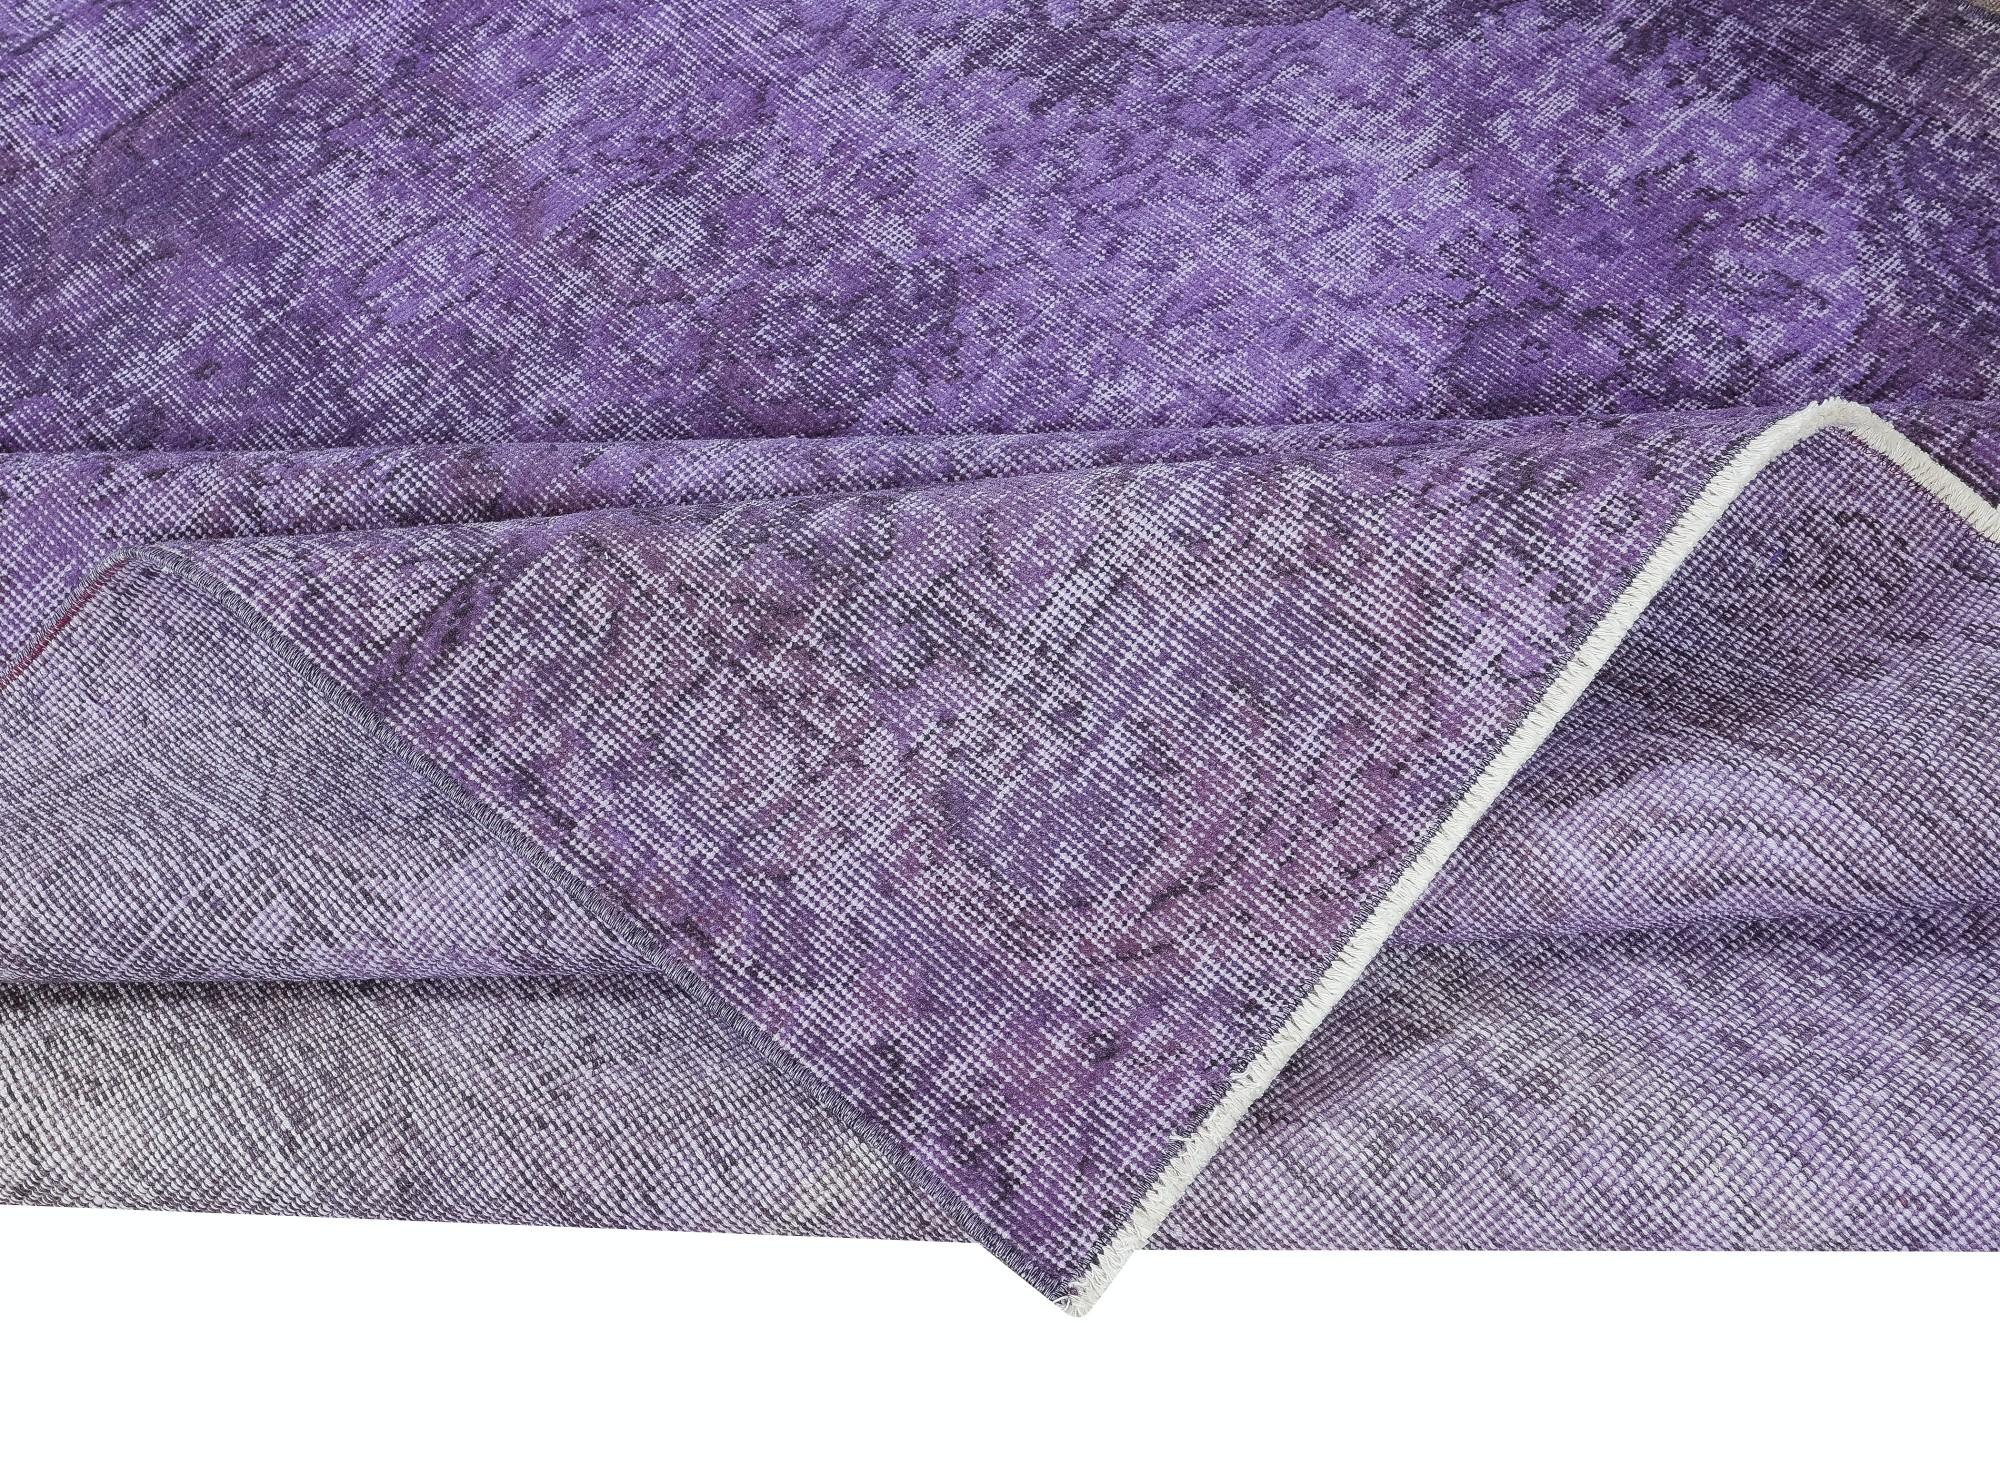 Hand-Woven 6.2x9.3 Ft Royal Purple Turkish Floor Rug, Handmade Overdyed Living Room Carpet